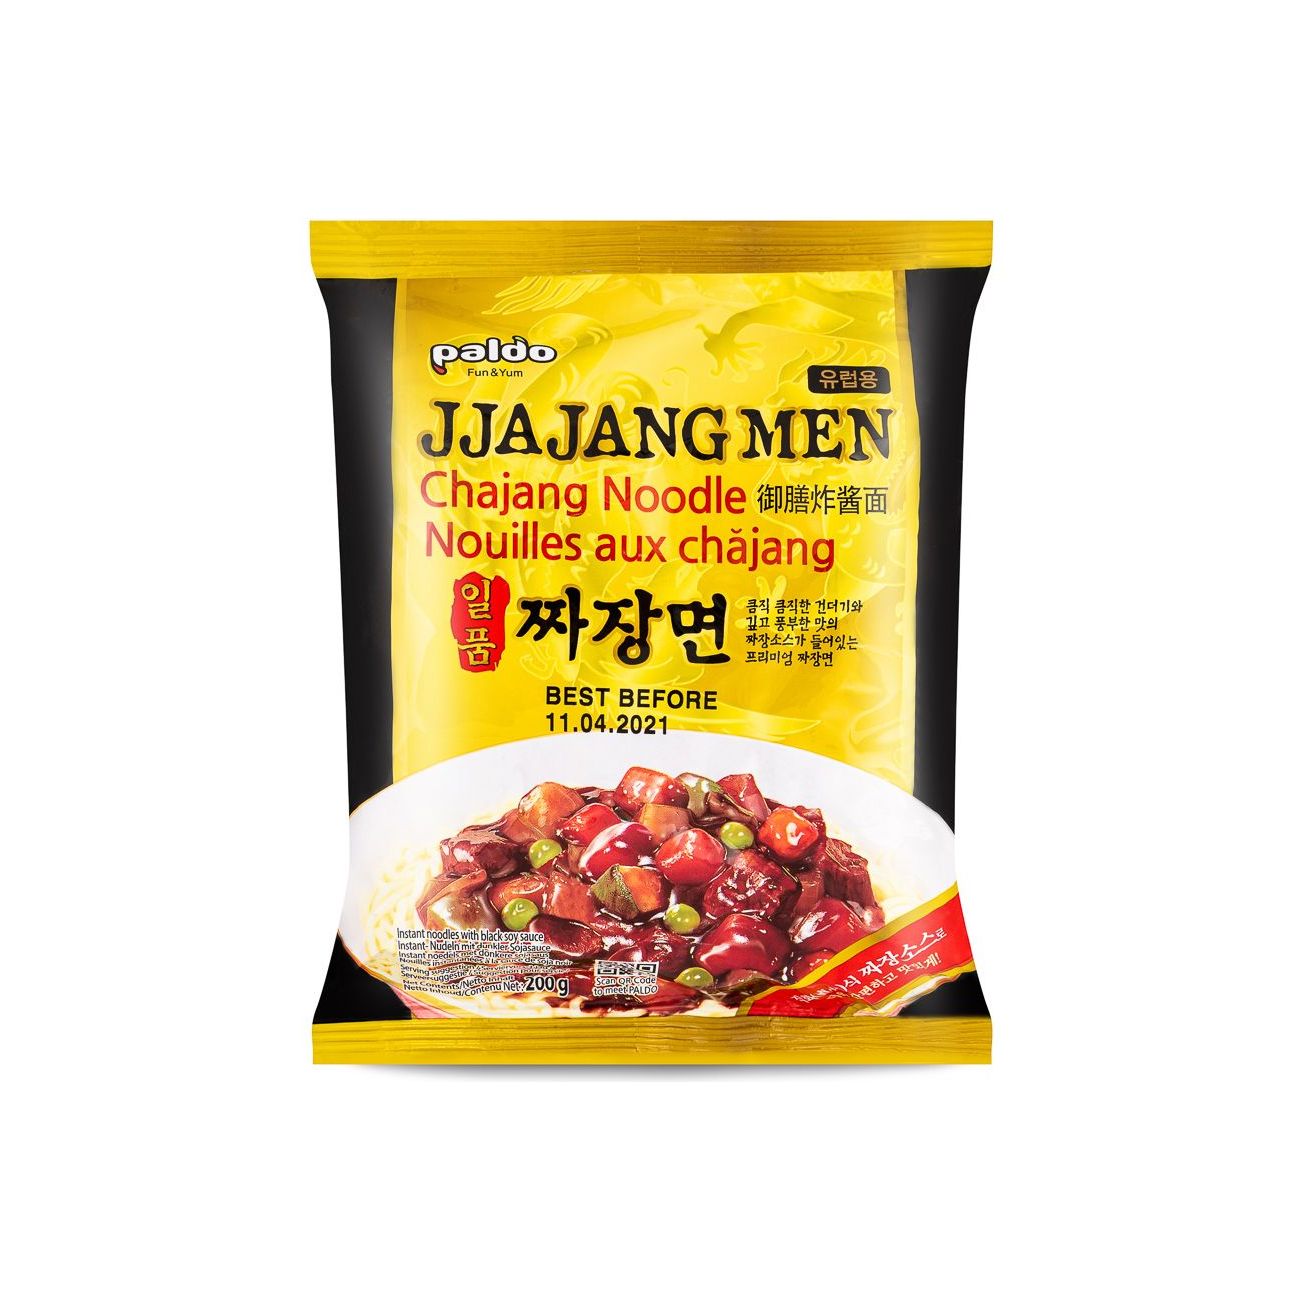 Paldo Jjajangmen Chajang Noodle 1pk